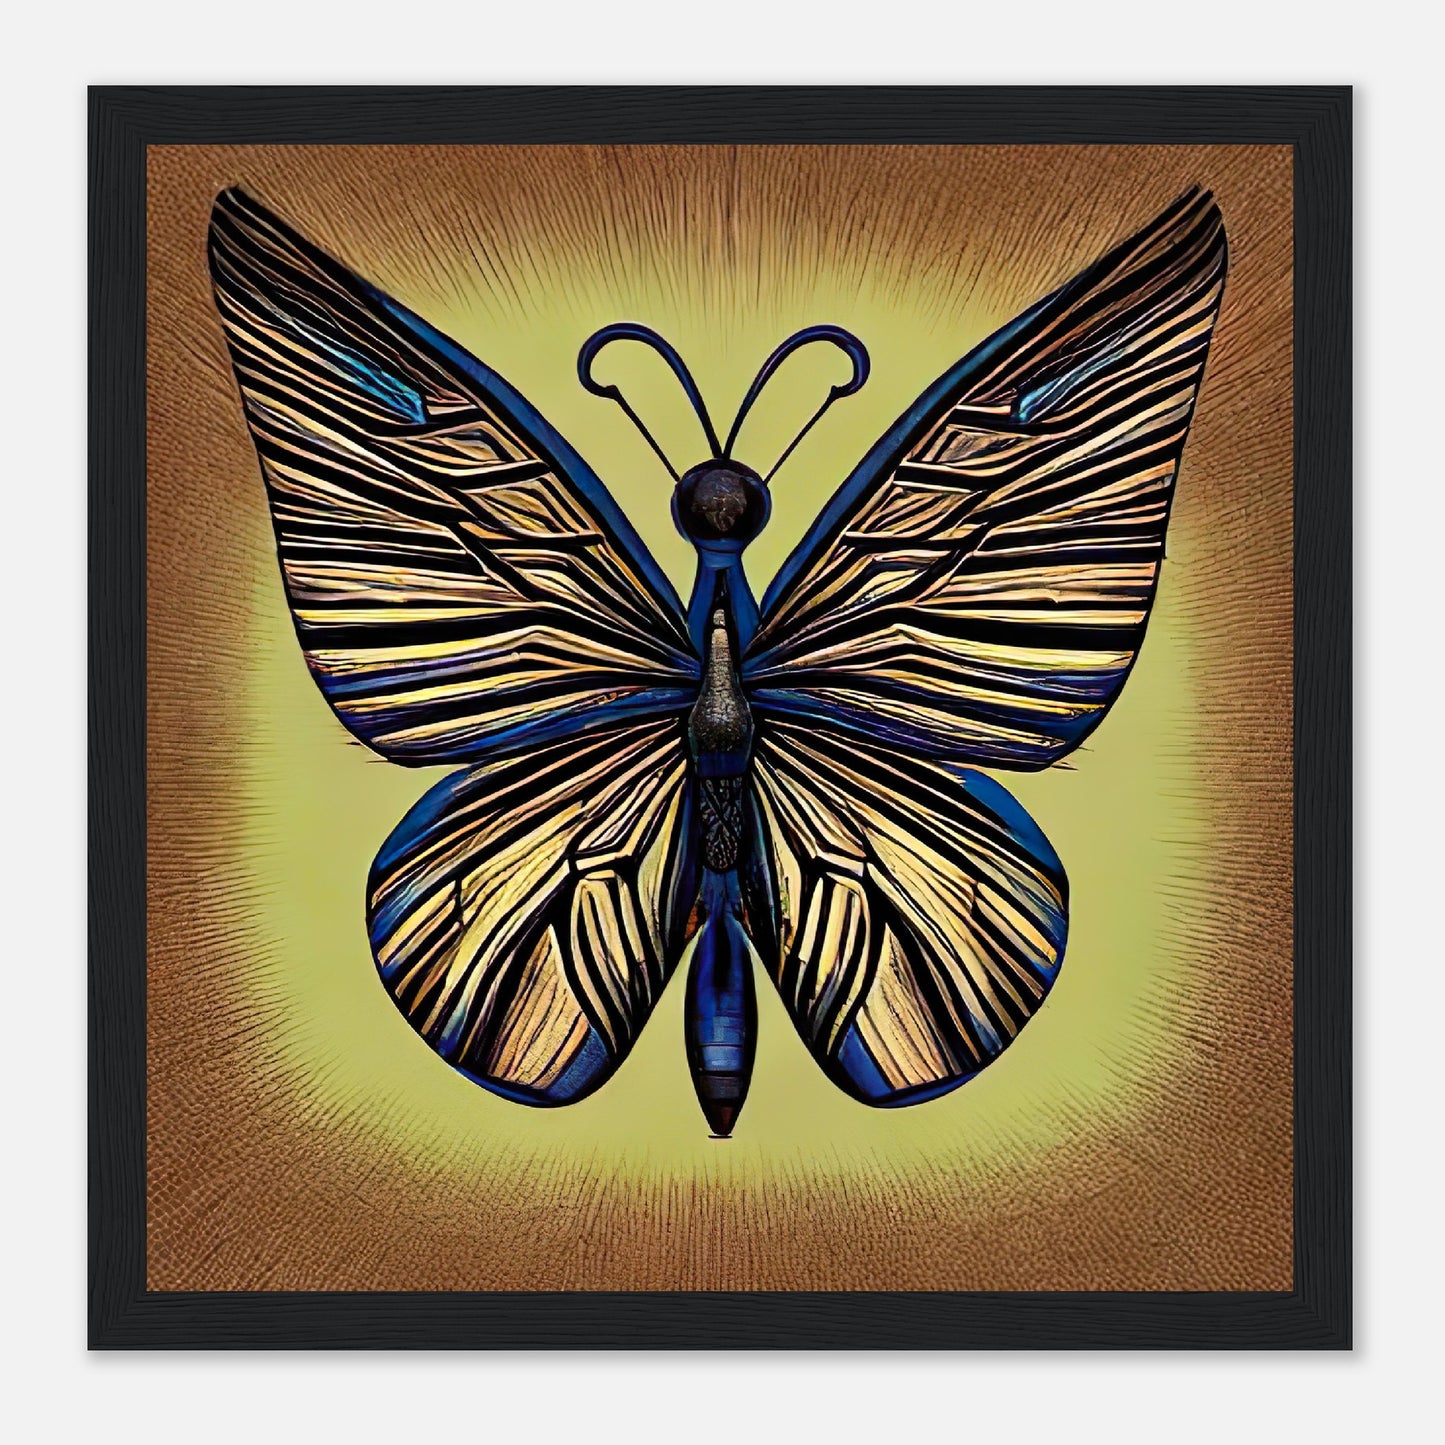 Gerahmtes Premium-Poster - Schmetterling - Digitaler Stil, KI-Kunst - RolConArt, Digitalkunst - Kreative Vielfalt, 30x30-cm-12x12-Schwarz